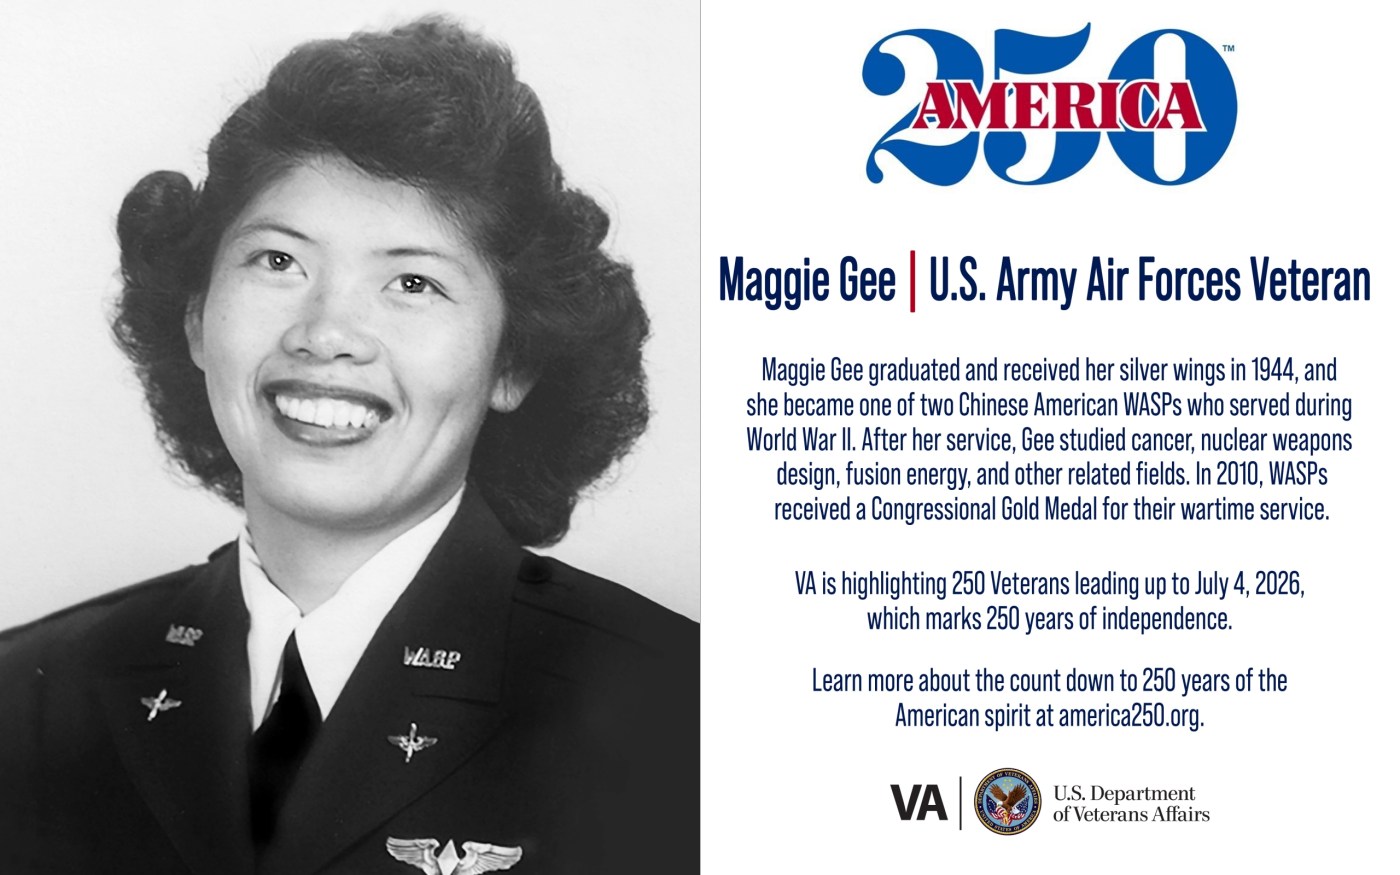 America250 Army Air Forces Veteran Maggie Gee